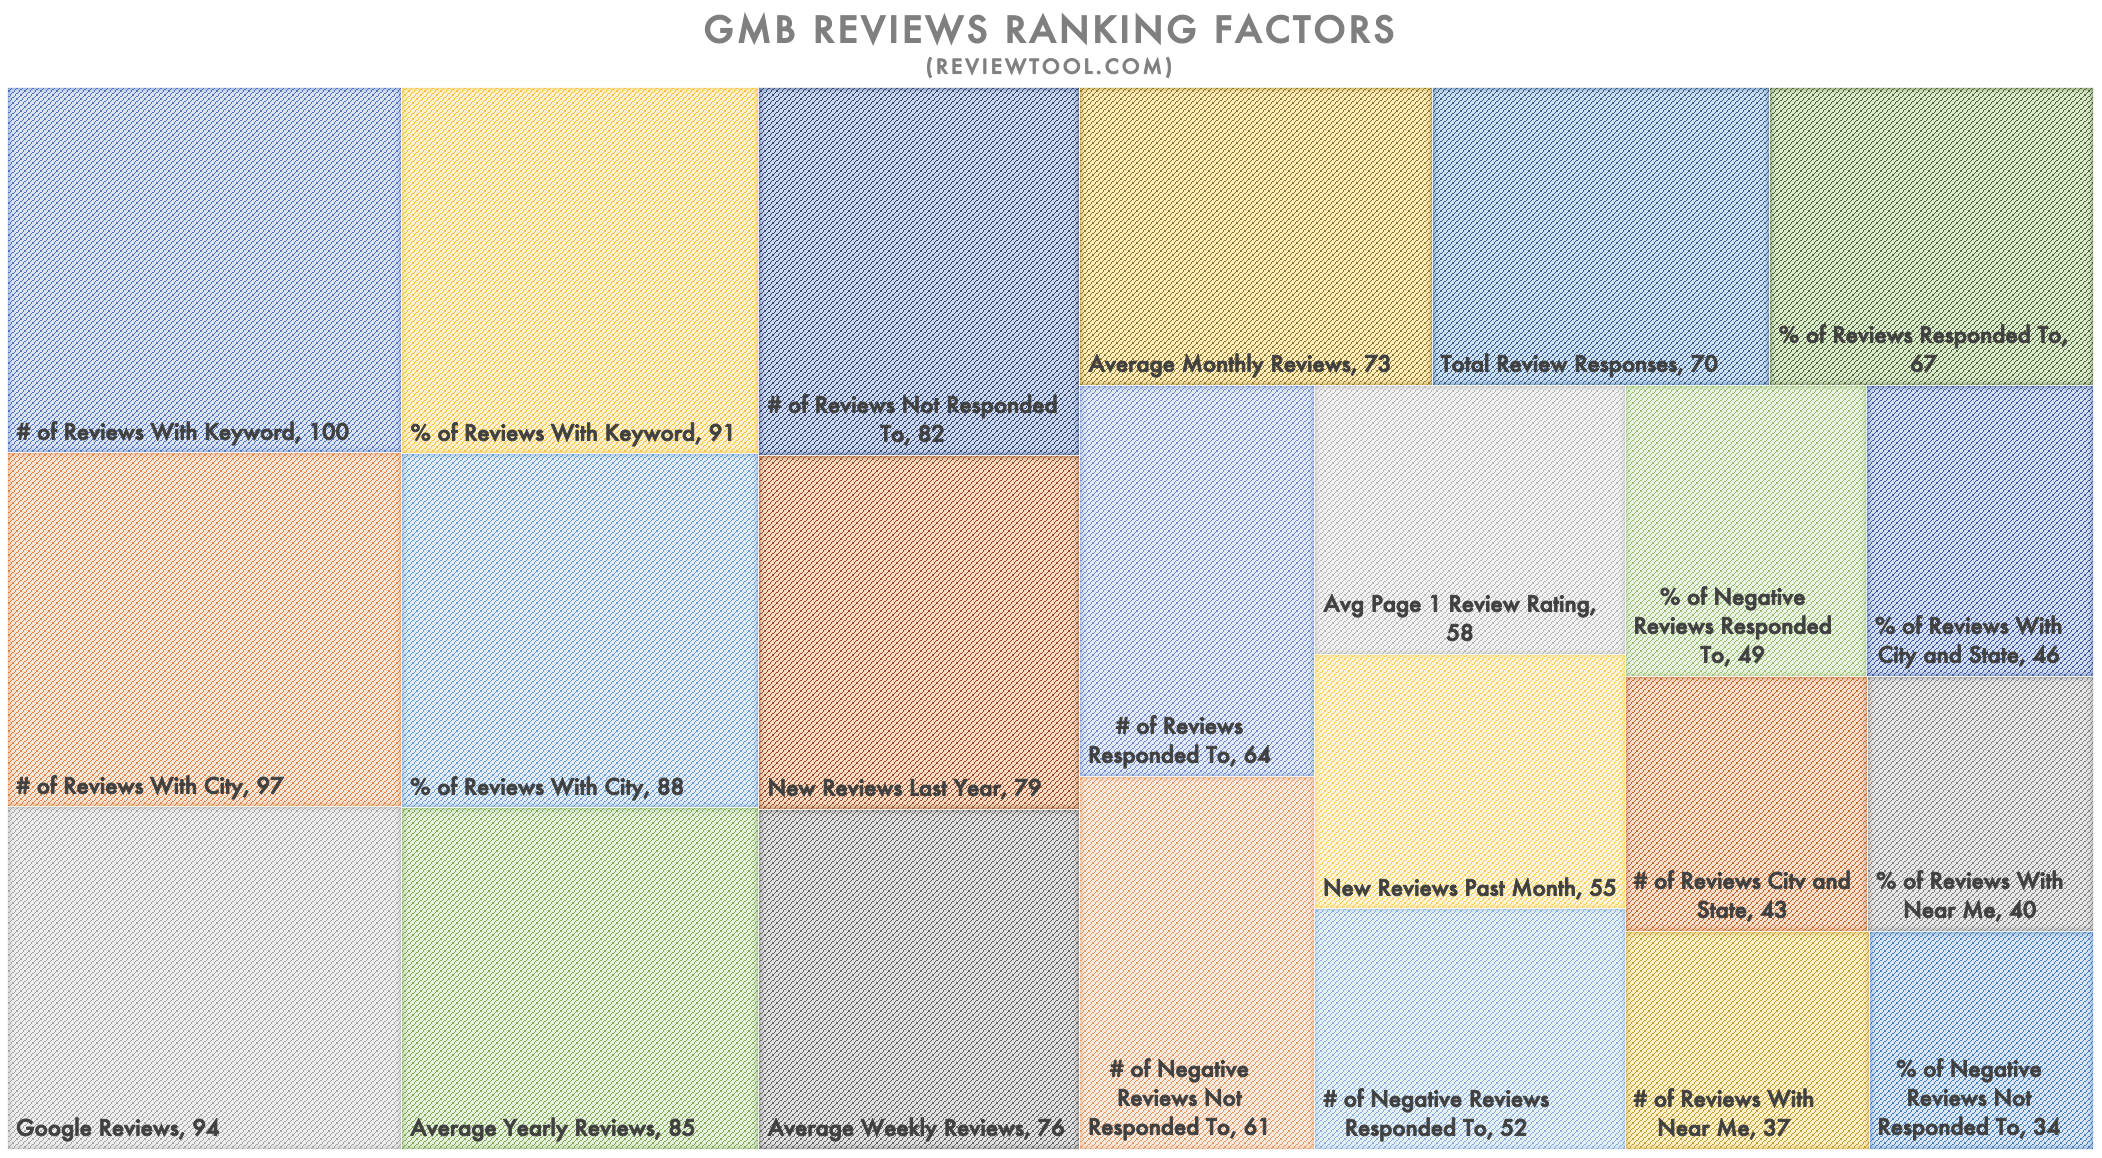 Reviews and Ratings - Google Ranking Factors